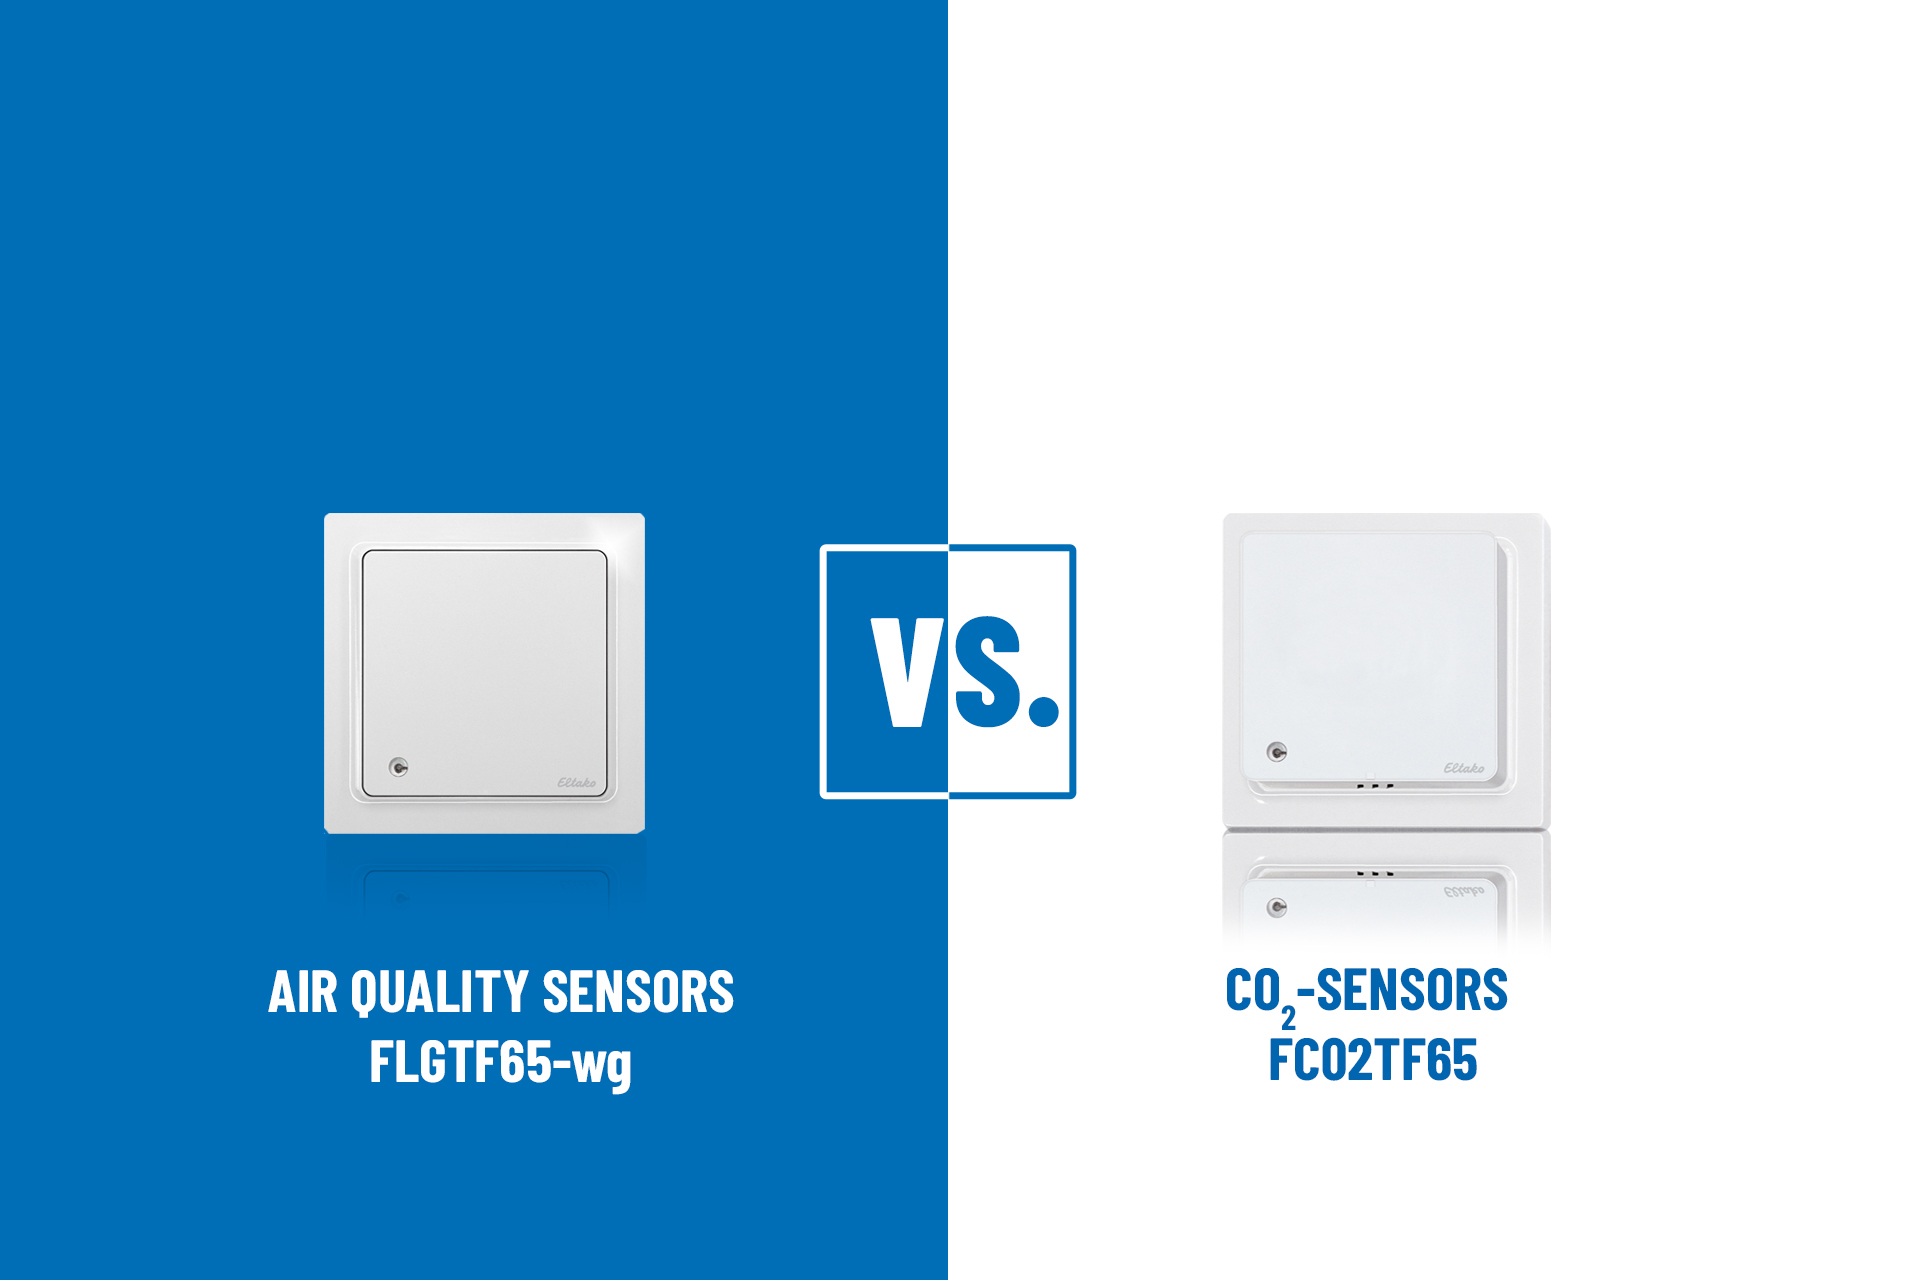 Air quality sensors vs. CO2 sensors